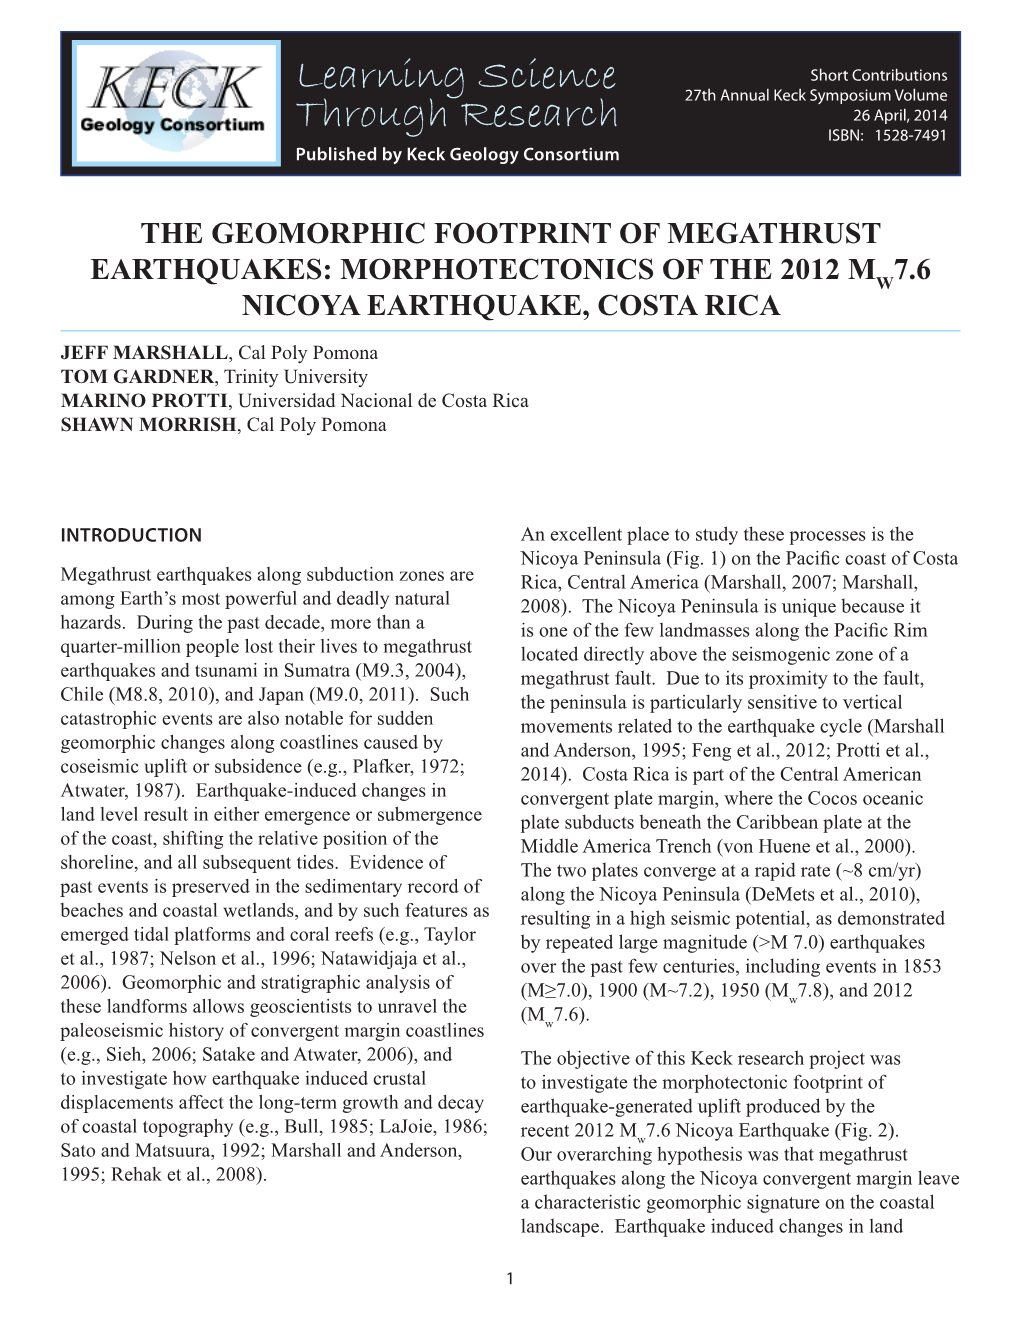 The Geomorphic Footprint of Megathrust Earthquakes: Morphotectonics of the 2012 M 7.6 Nicoya Earthquake, Costa Rica